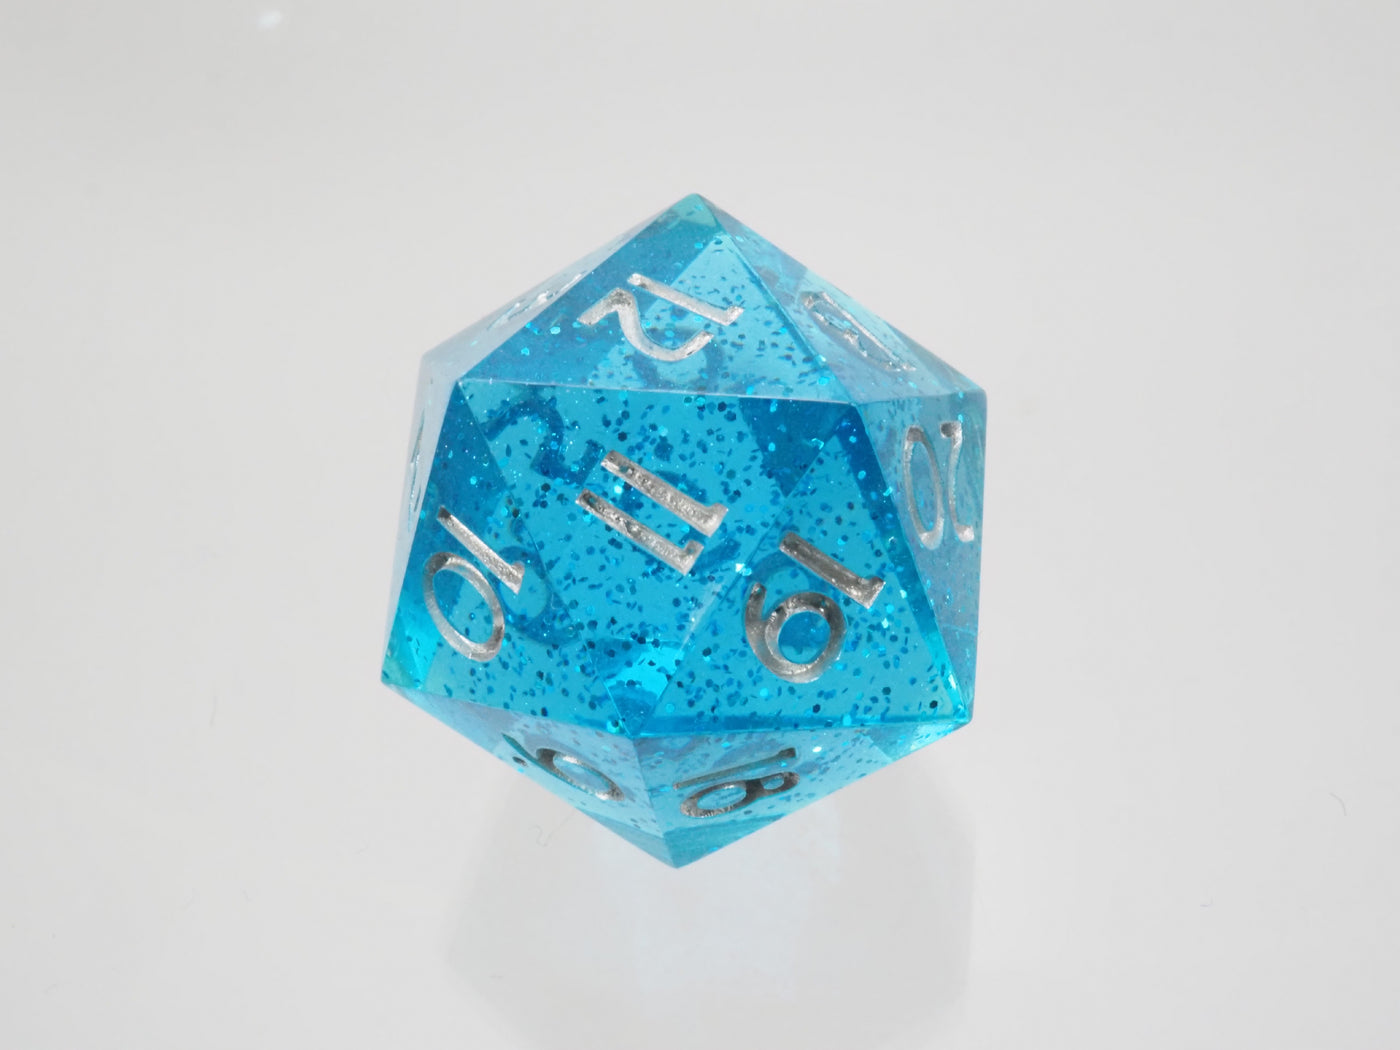 Light Blue Spindown D20 with glitter